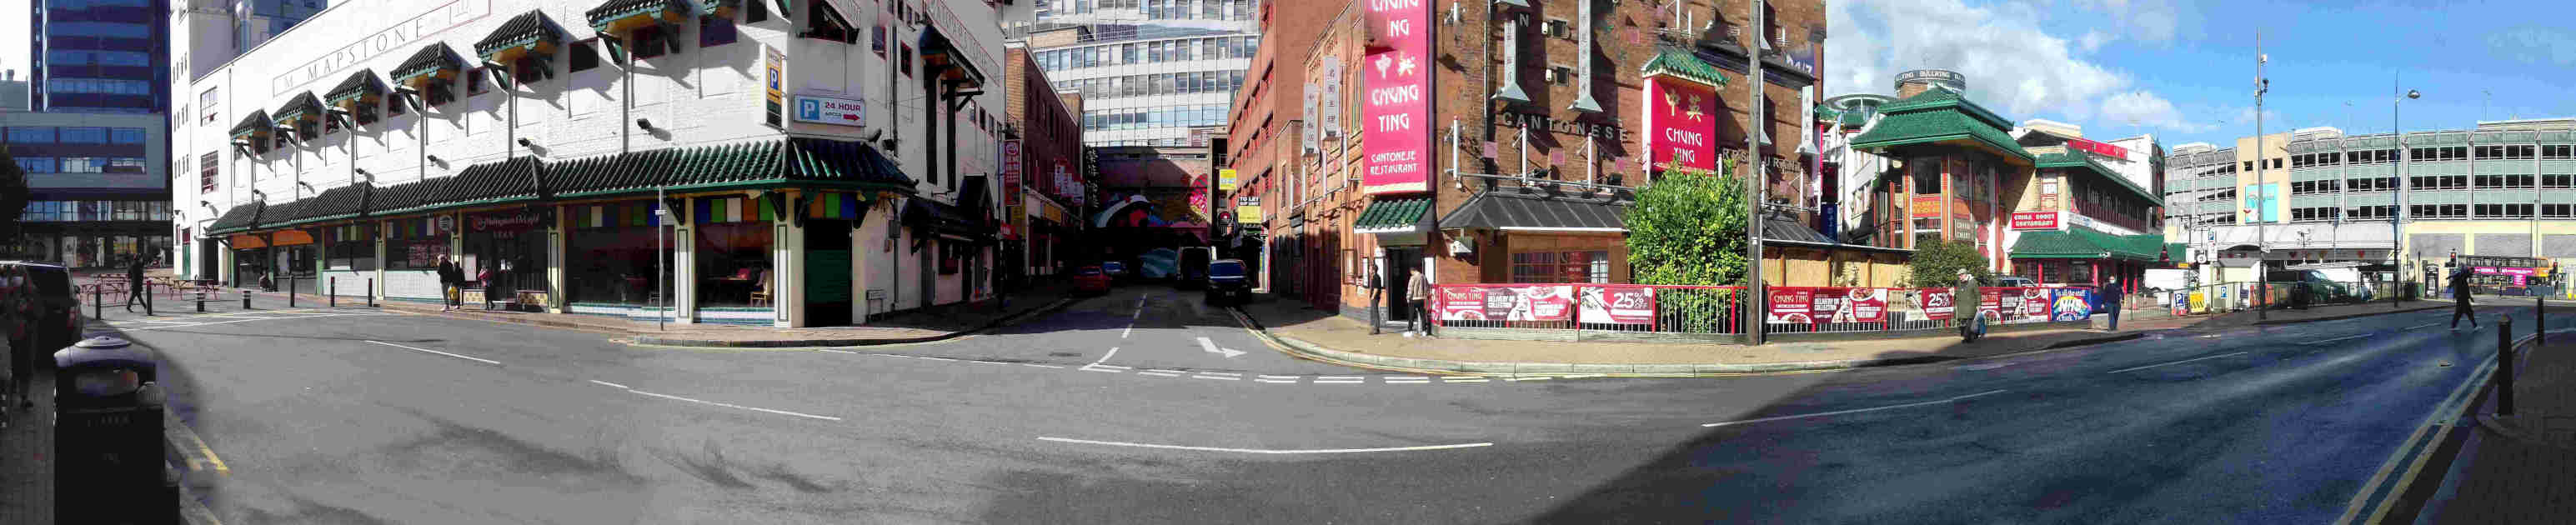 ImagesBirmingham/Birmingham Pubs Gay Chinese Quarter Panorama.jpg